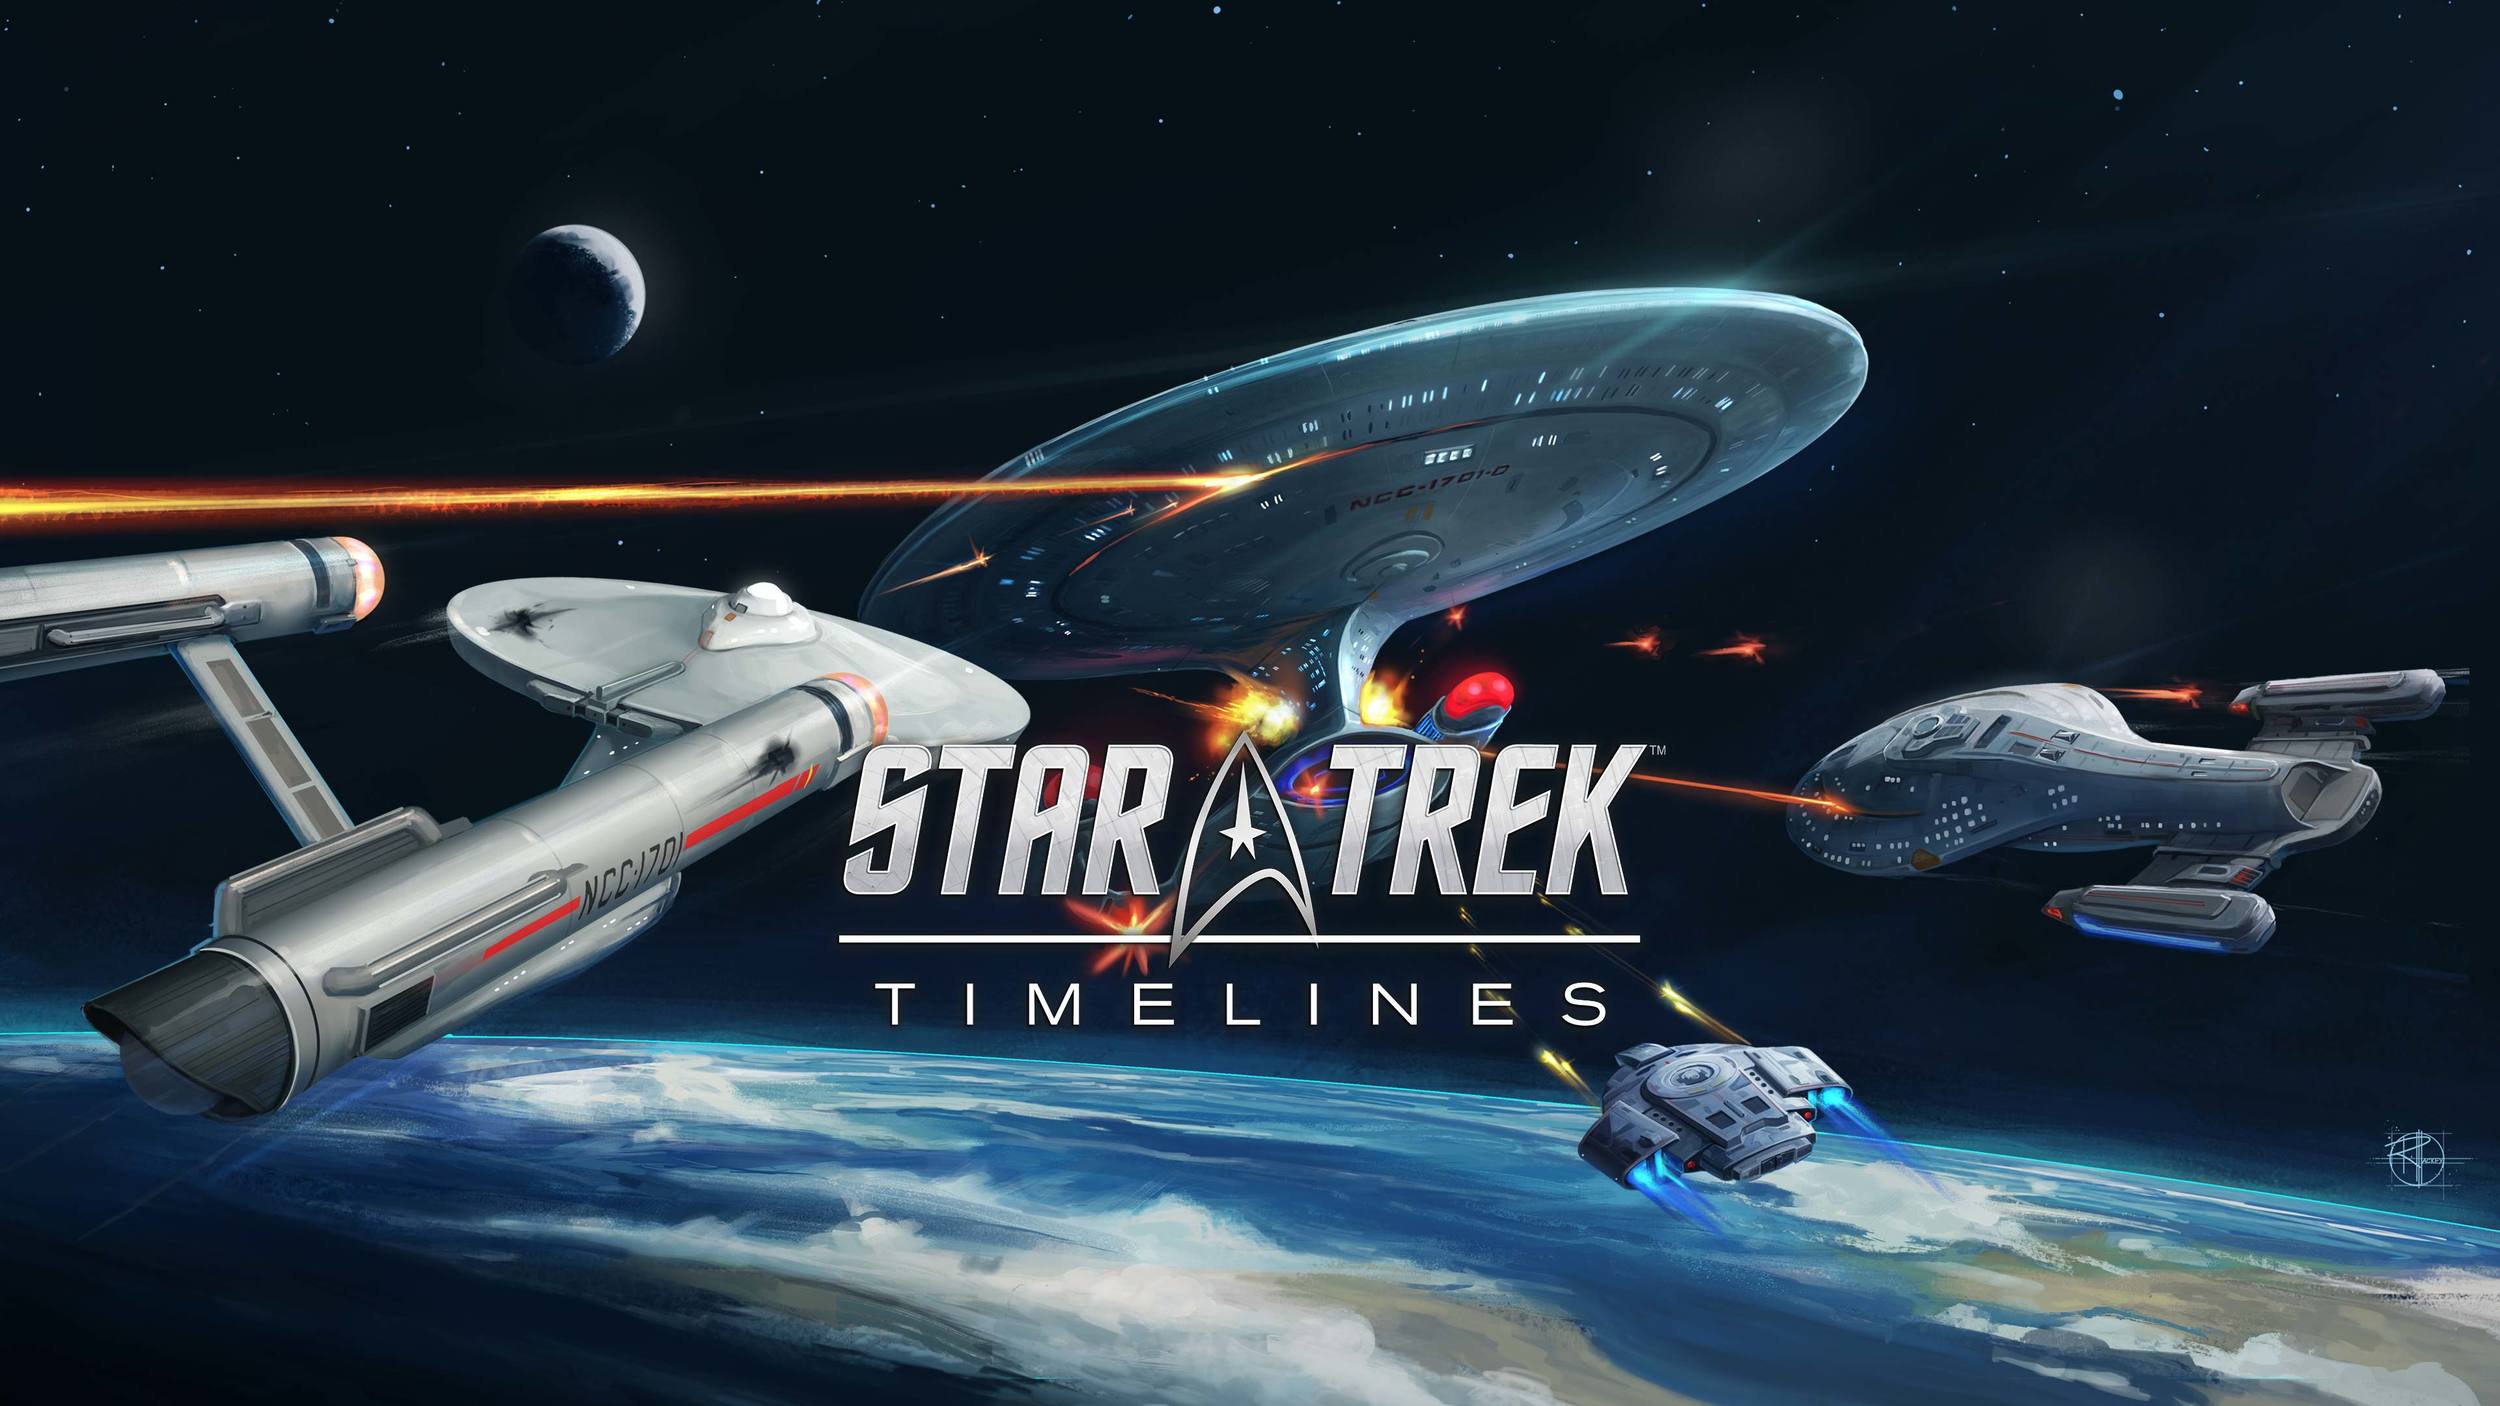 Star Trek Timelines (es) — Disruptor Beam